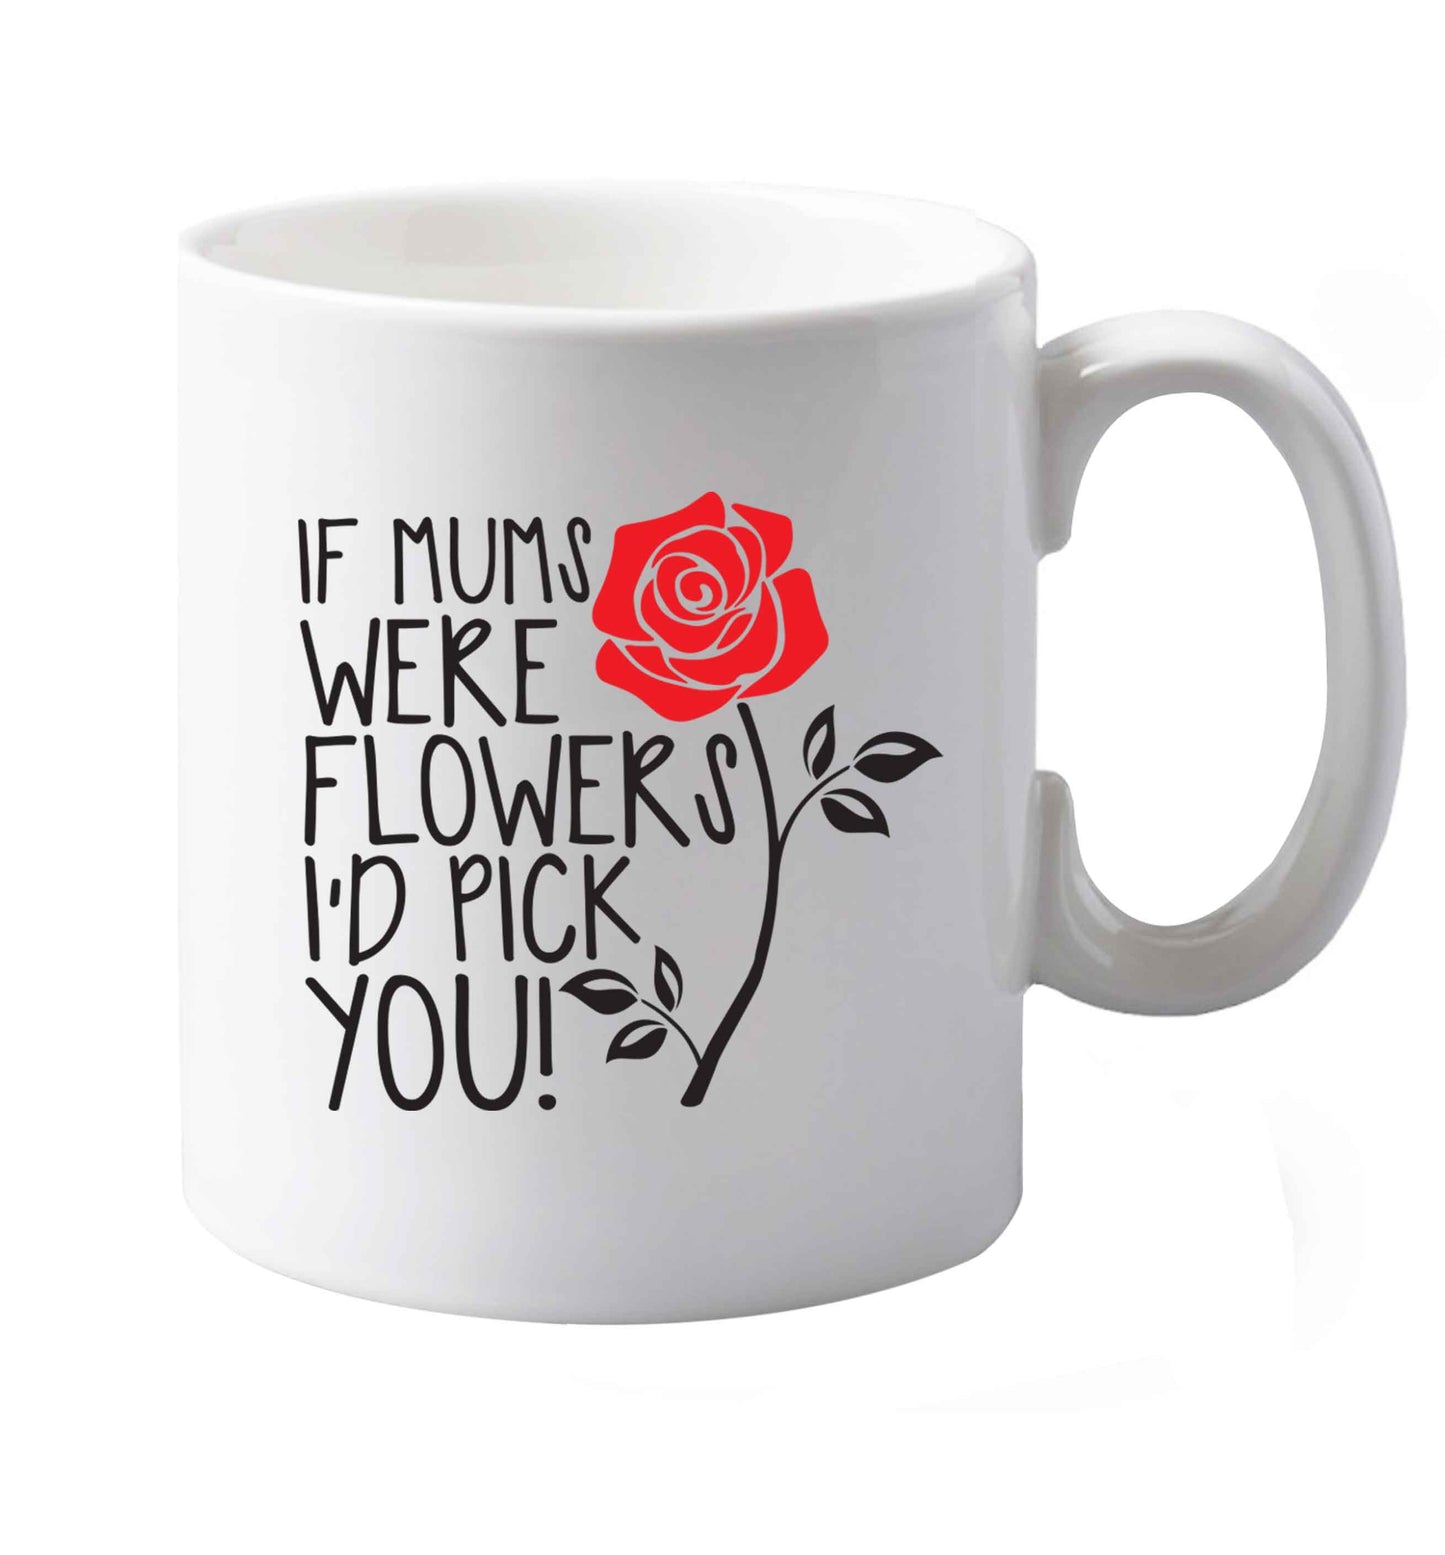 10 oz If mums were flowers I'd pick you! ceramic mug both sides